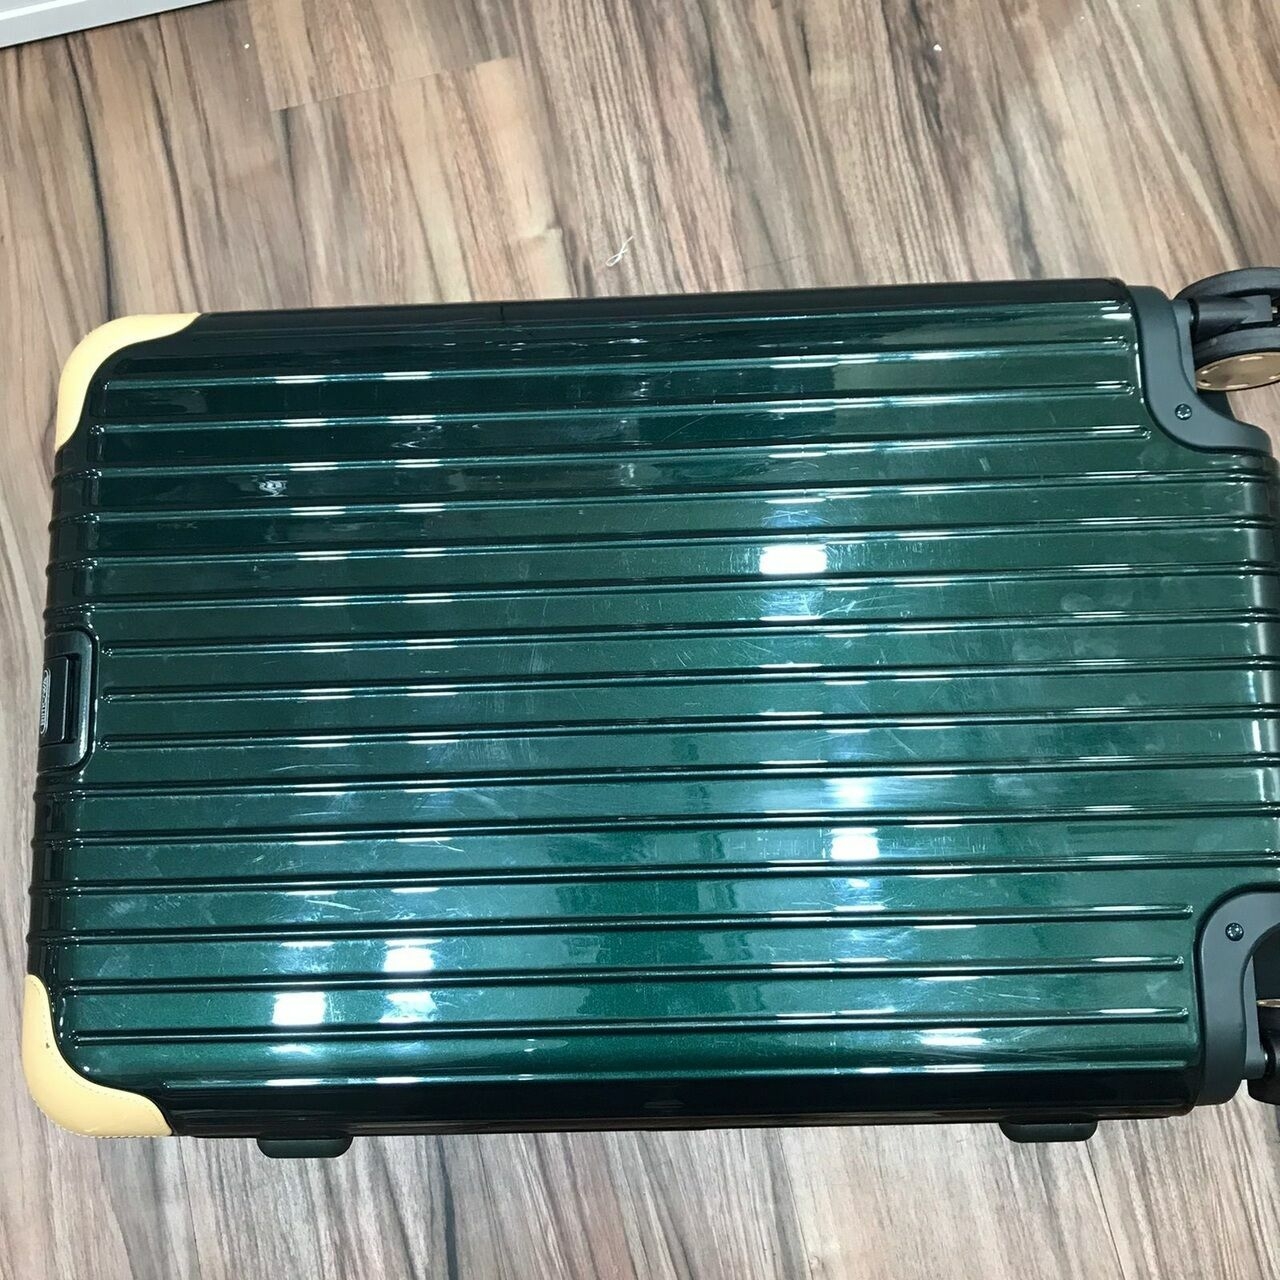  Rimowa Bossa Nova Green MW 63 2018 Luggage and Travel